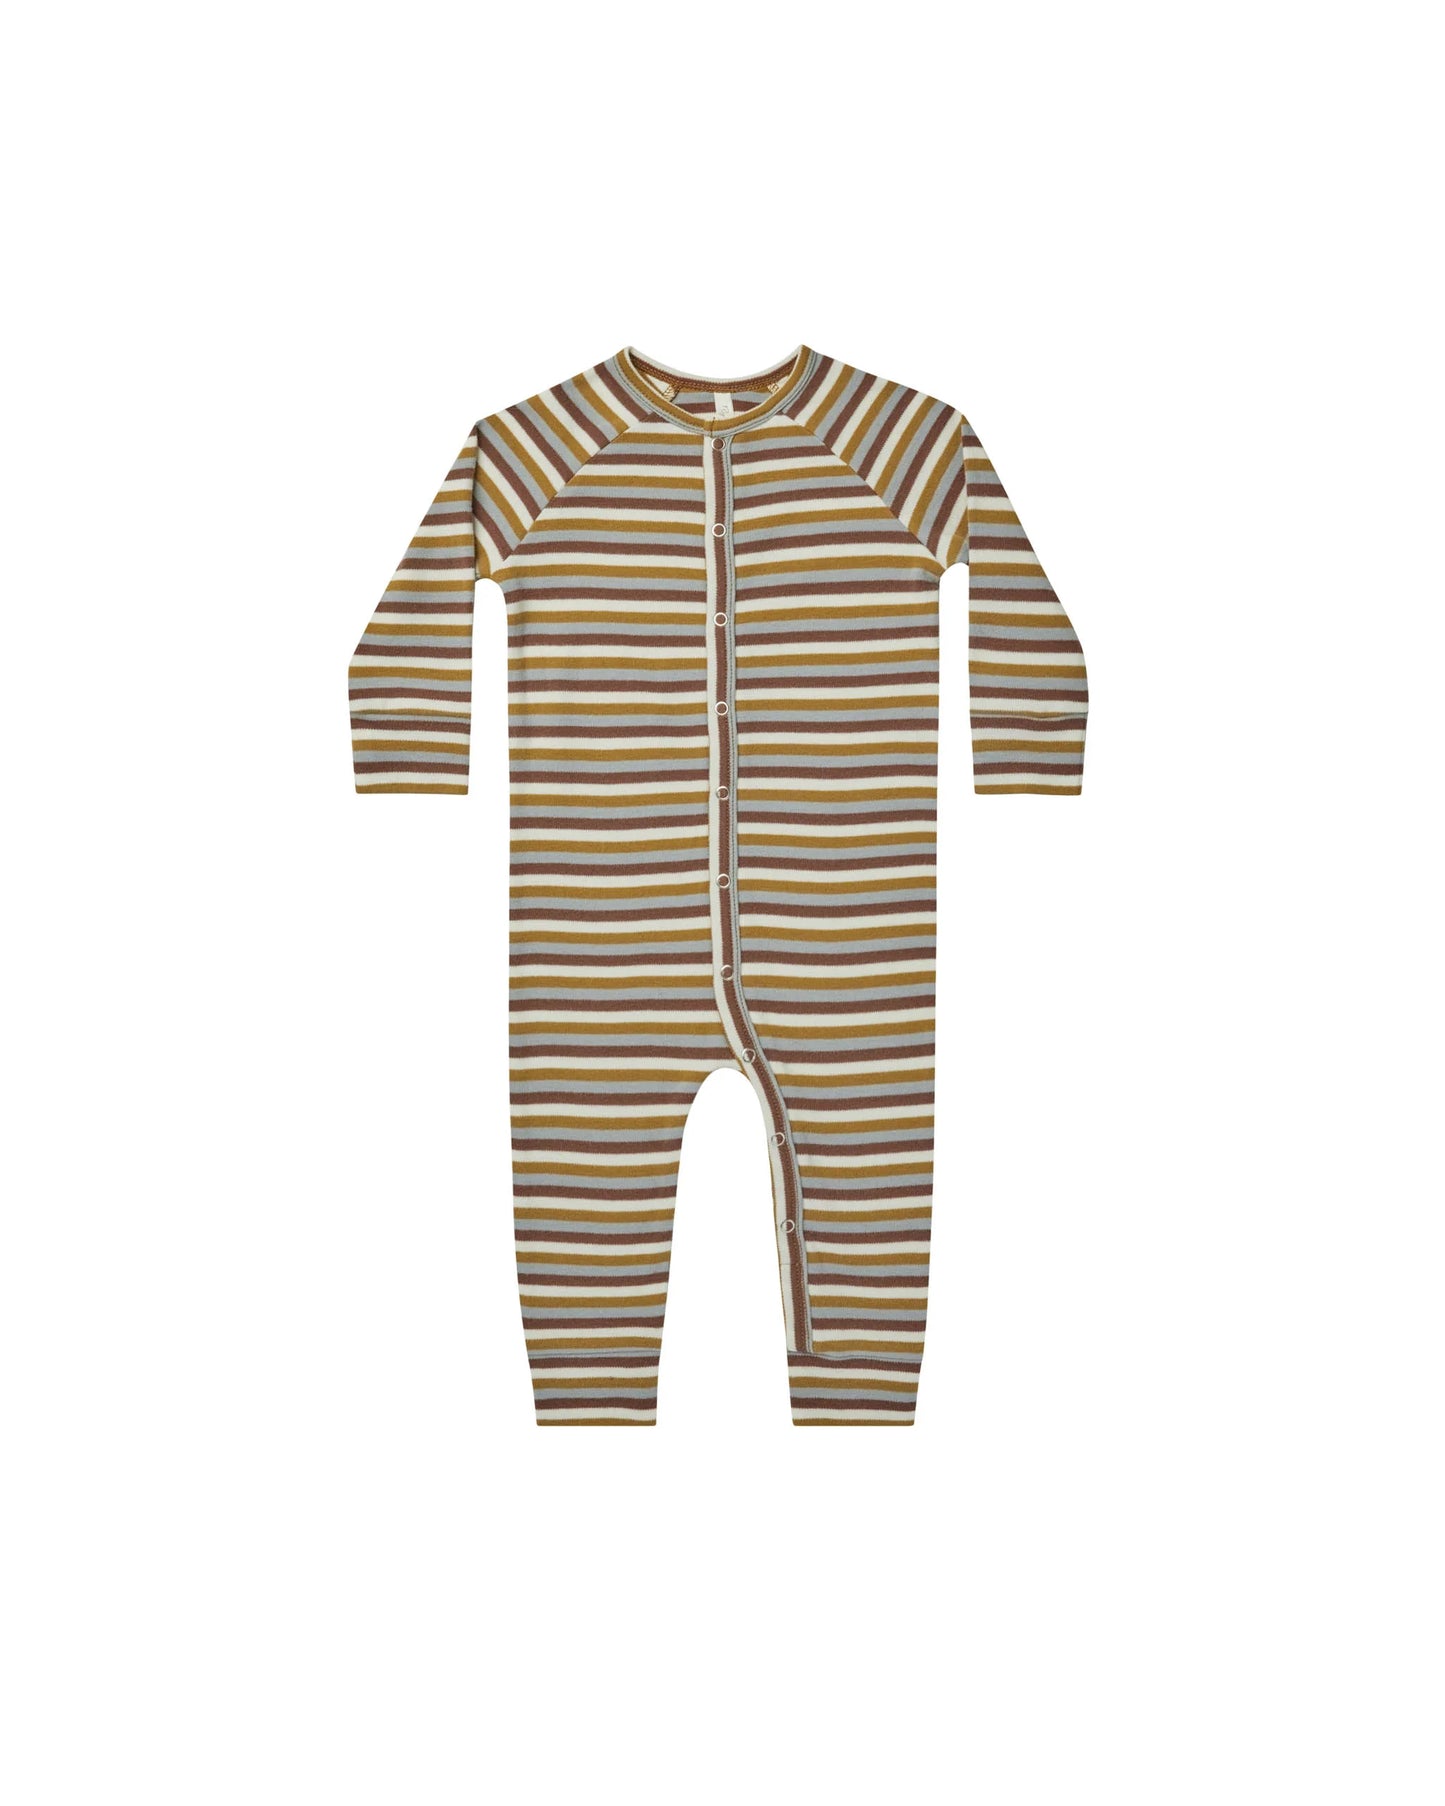 Rylee + Cru Long John Pajamas - Striped